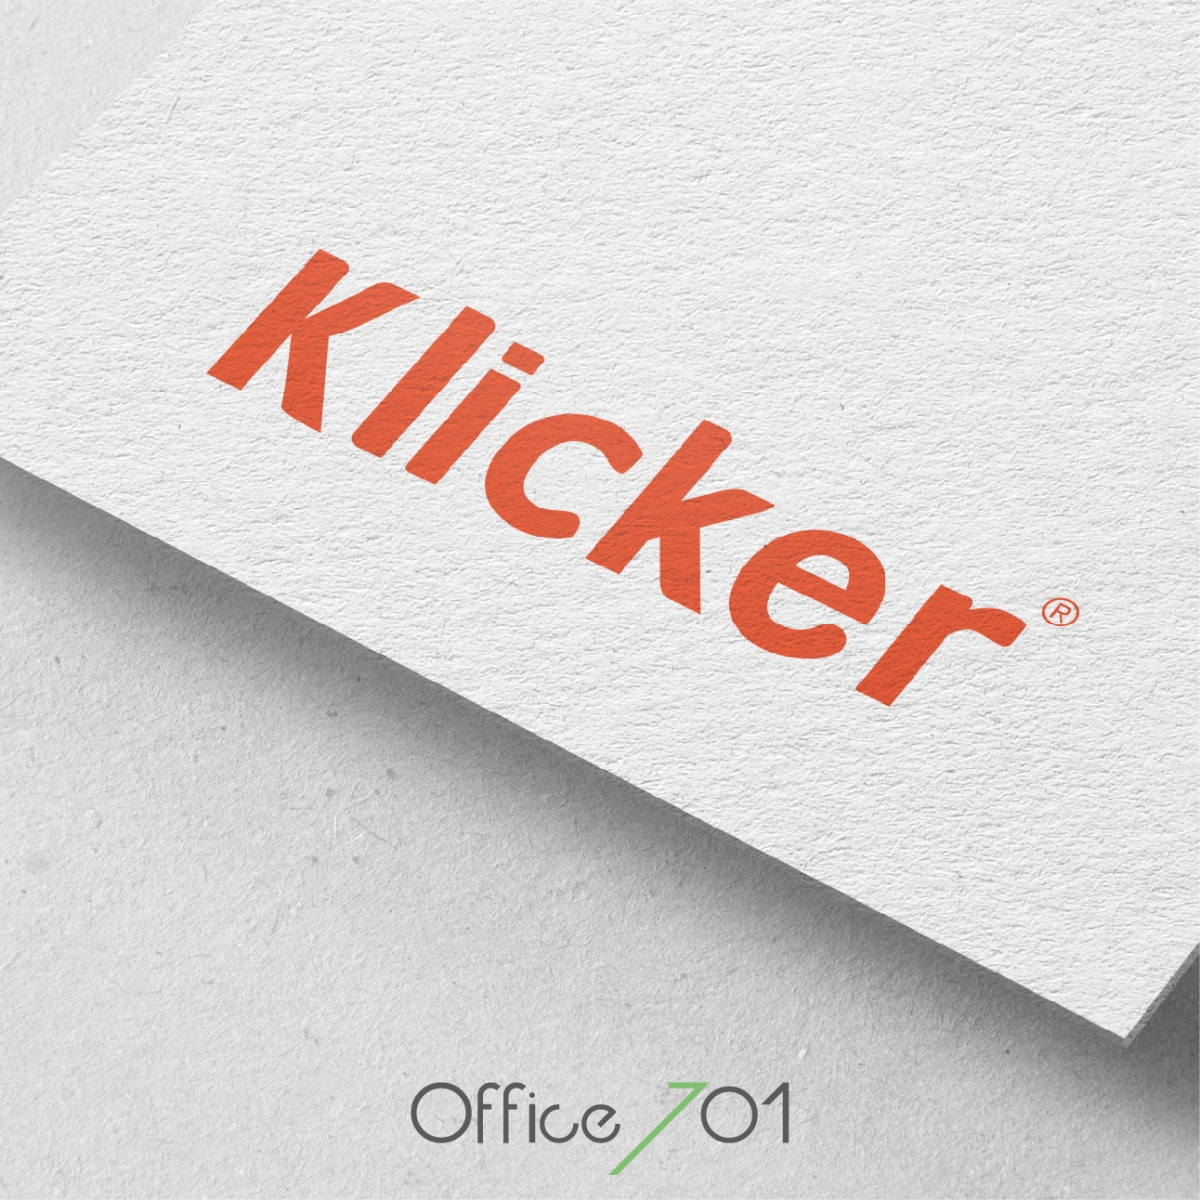 Office701 | Klicker Logo Tasarımı